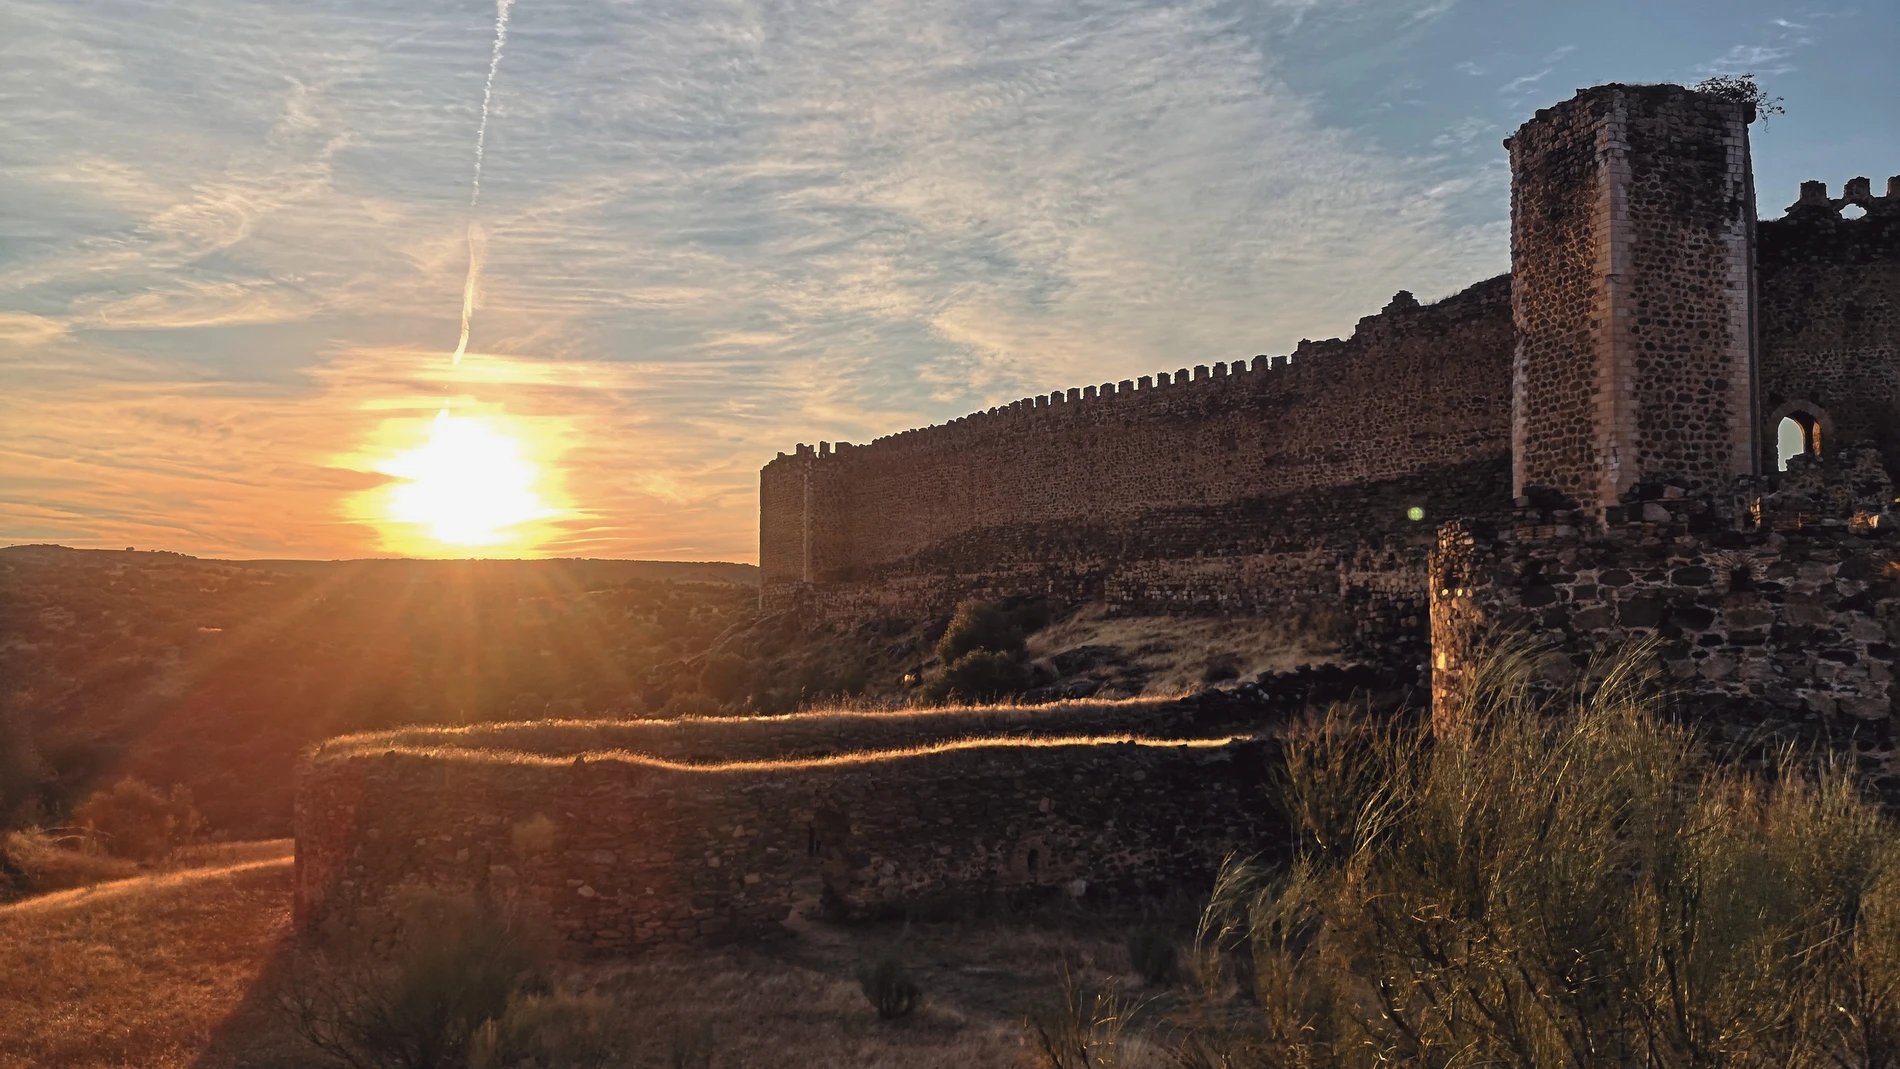 Impresionante vista del Castillo de Montalbán al atardecer.